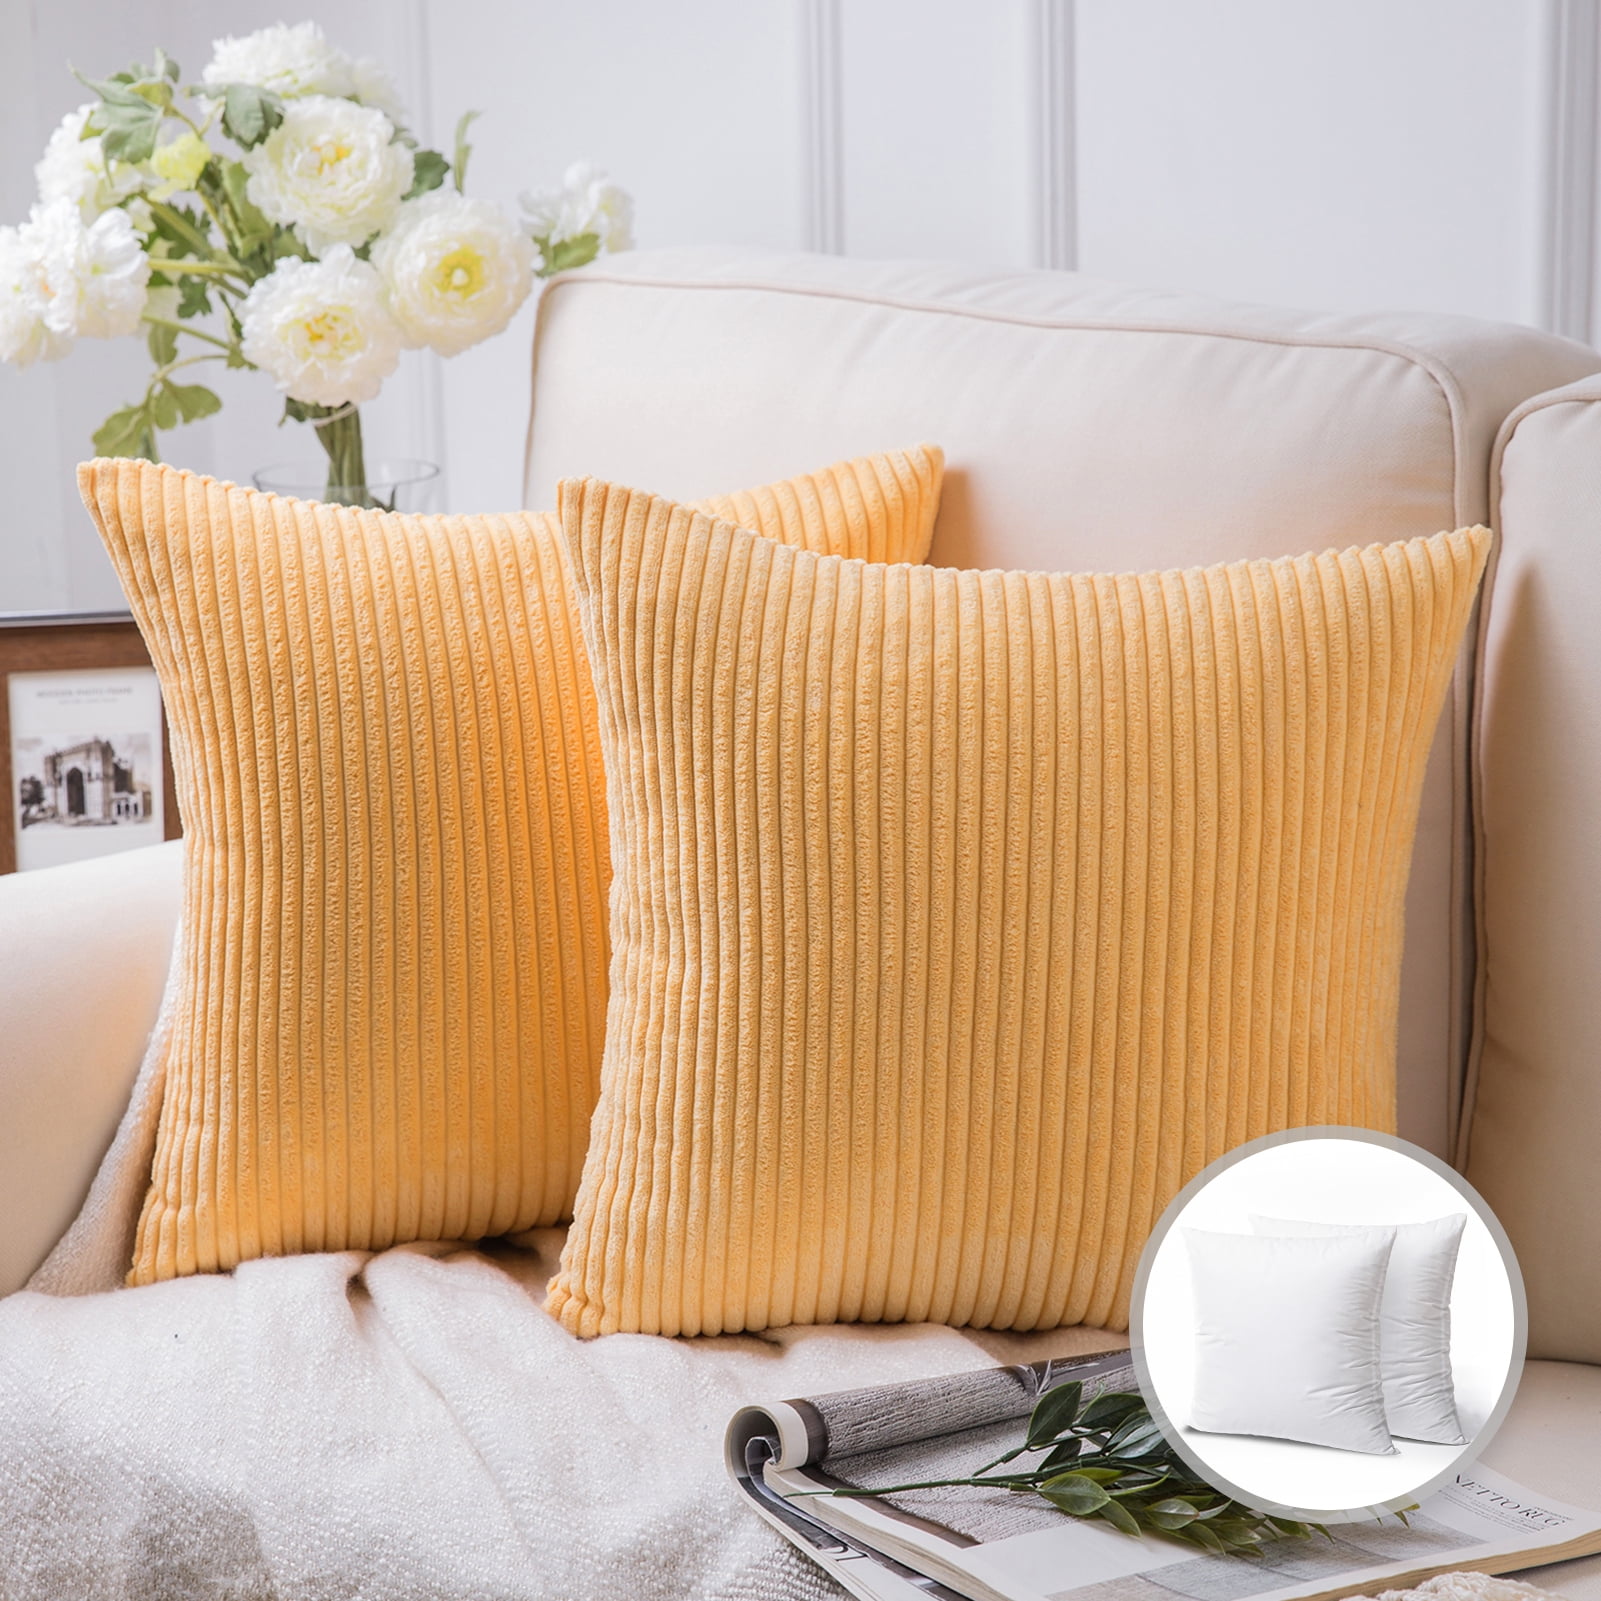 Linen Cushion Cover Pokemon Pikachu Figures Throw Pillowcase Home Decorative 